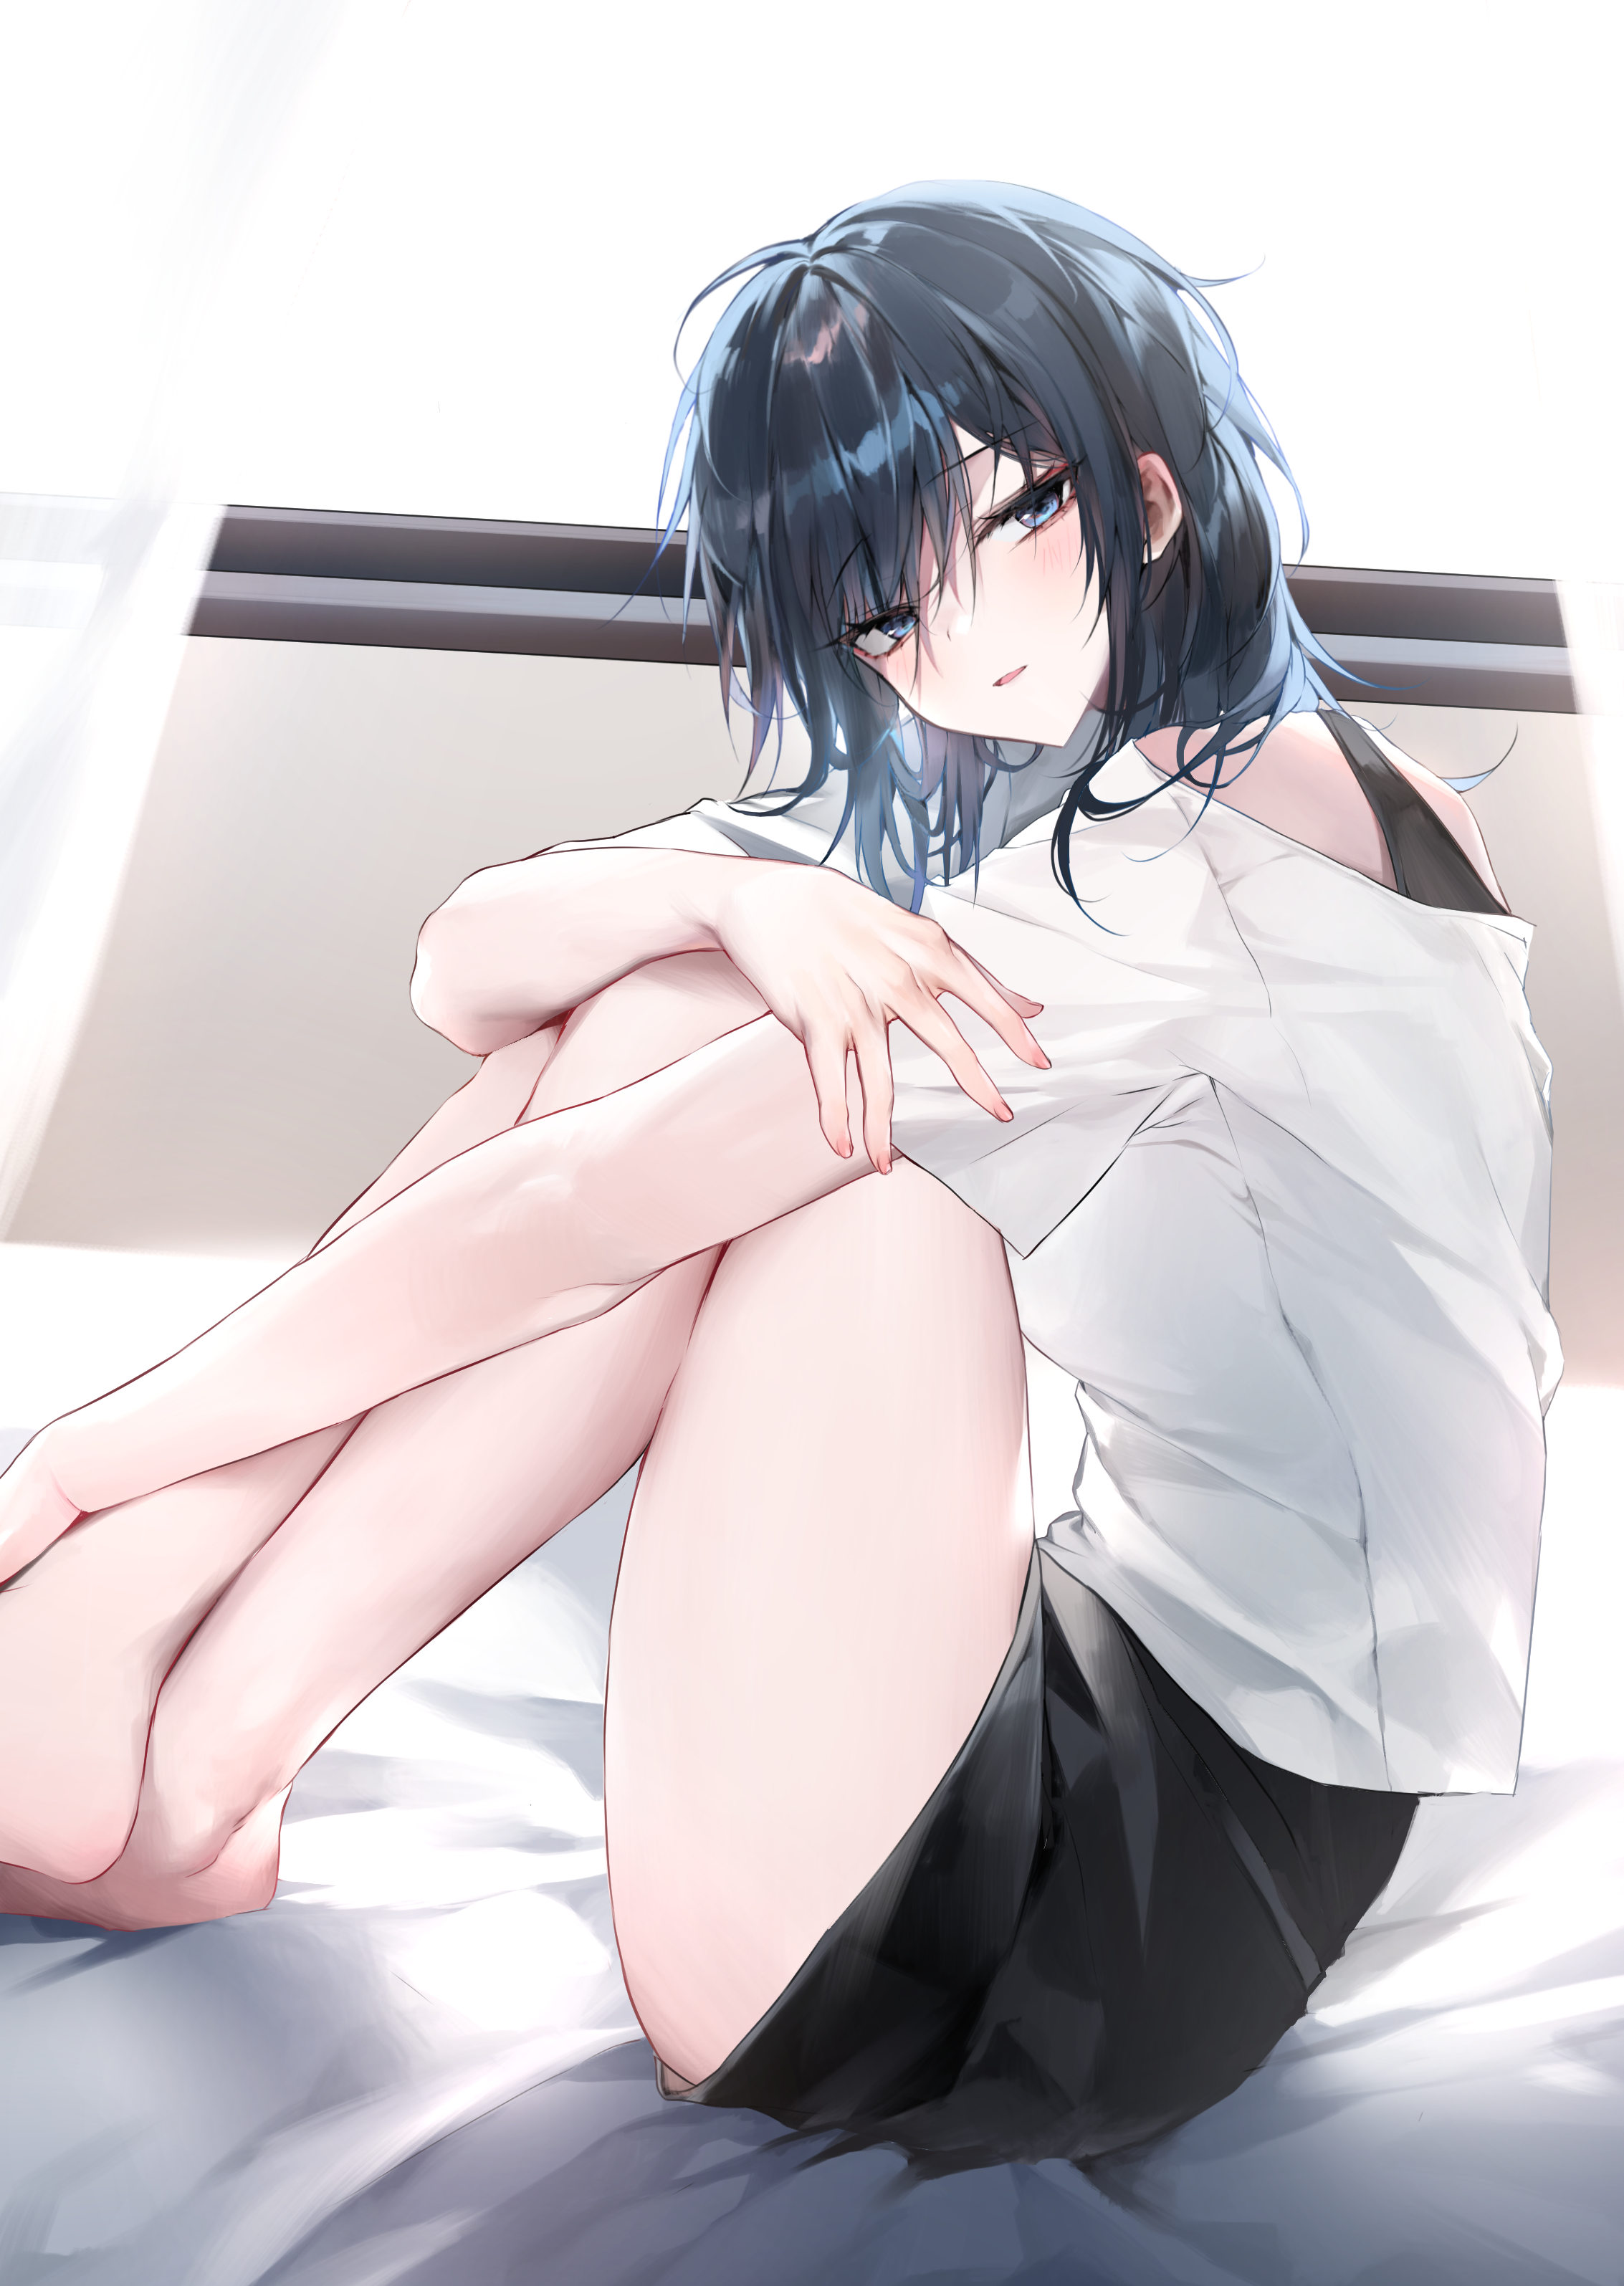 Anime 2266x3190 anime anime girls dark hair legs sitting looking at viewer shoulder length hair barefoot holding knees Bara artwork